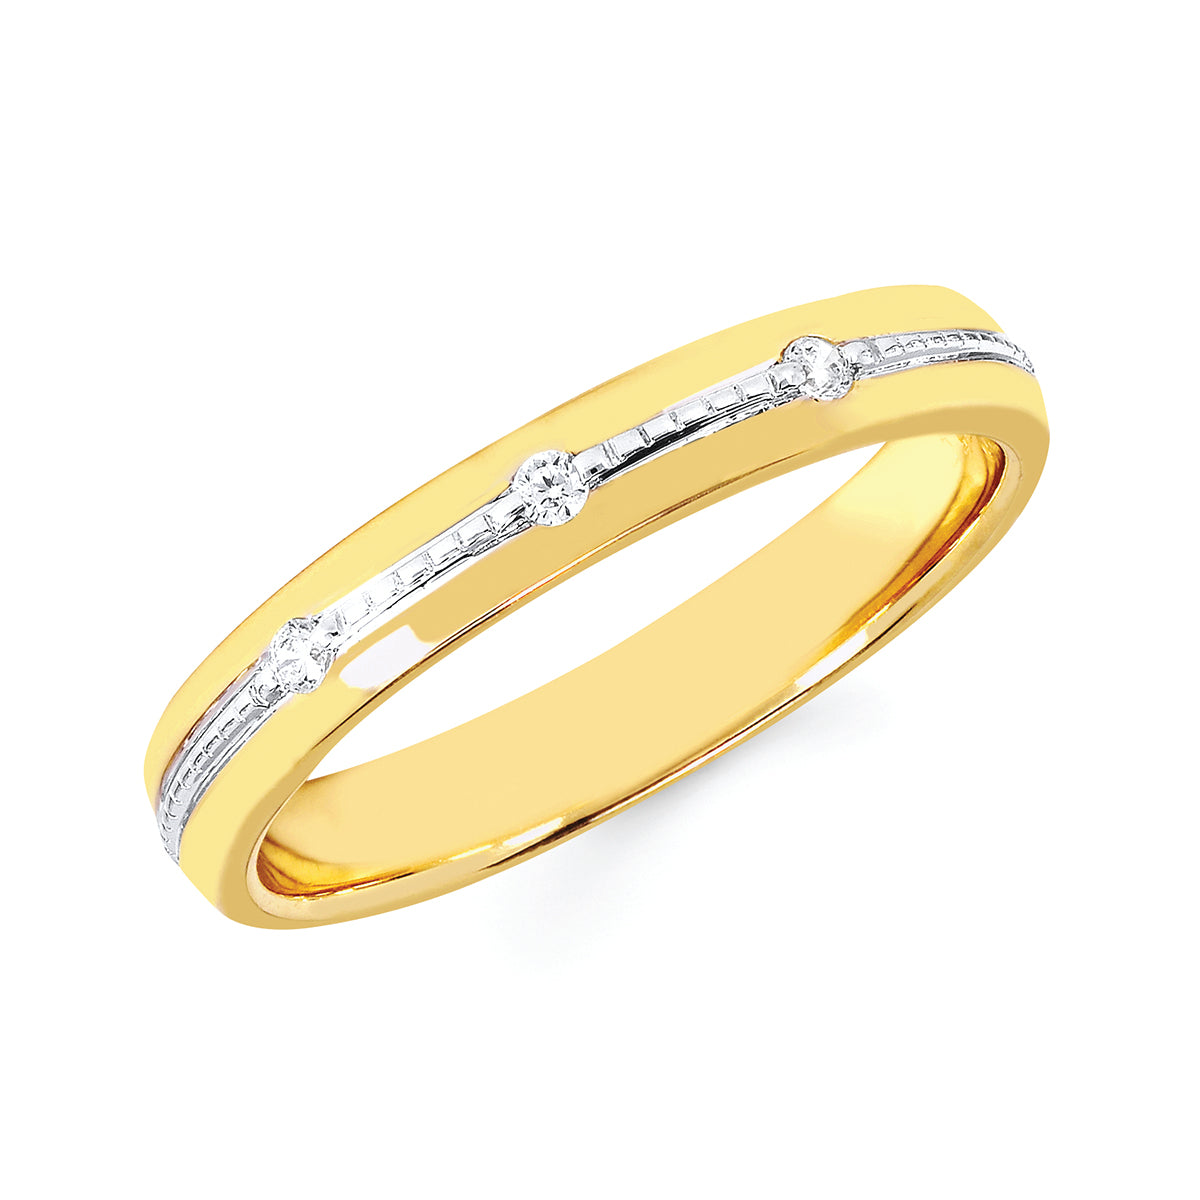 3MM Diamond Lifestyle Wedding Ring in 14K